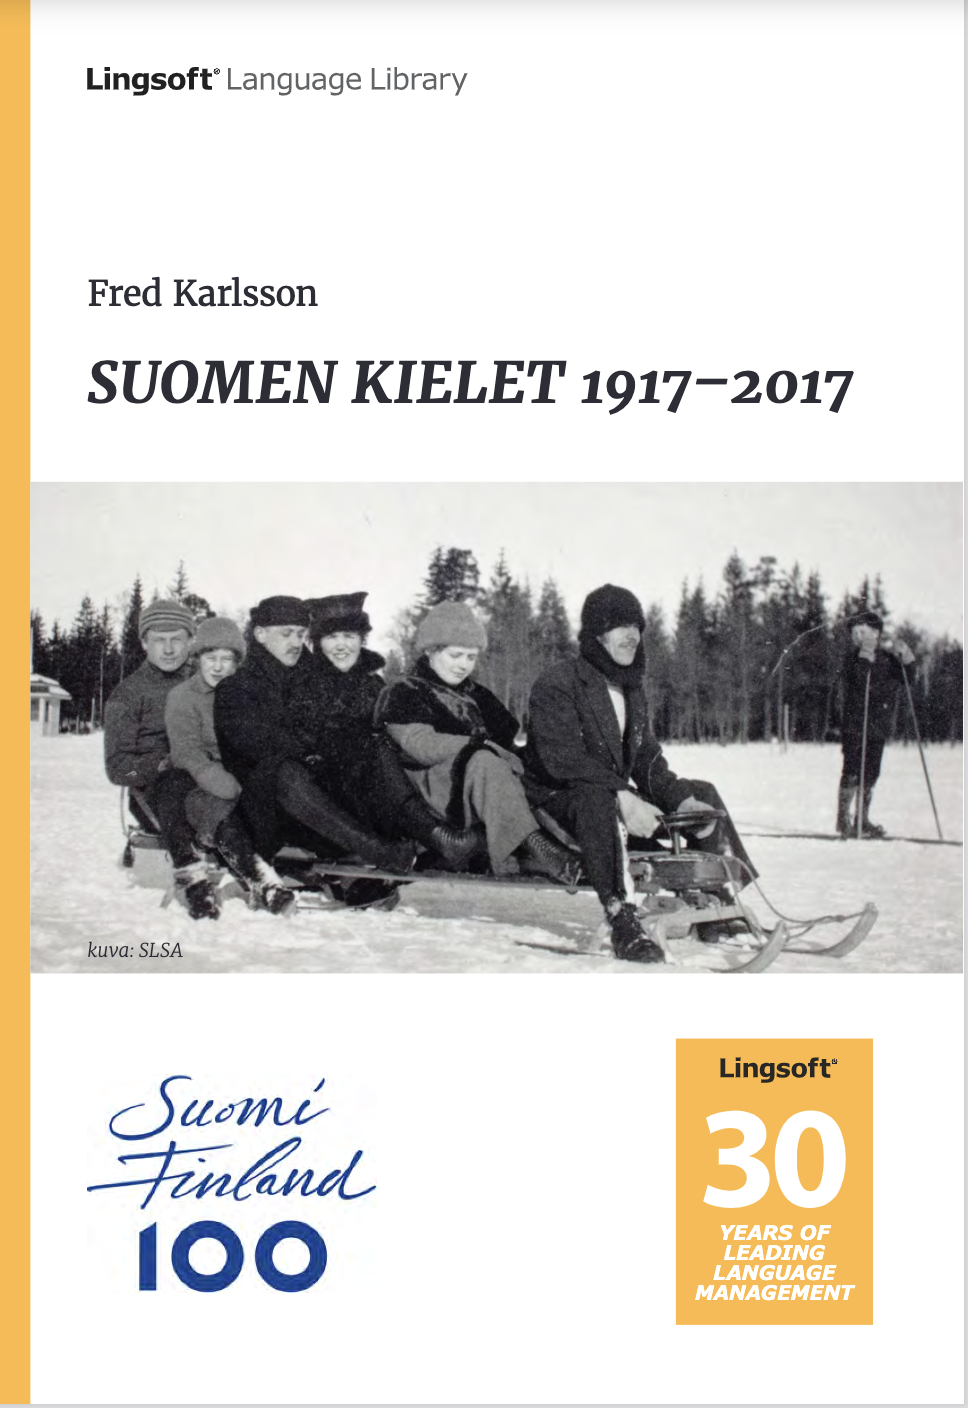 Suomen kielet 1917–2017 (EBook, Finnish language, Lingsoft Oy)